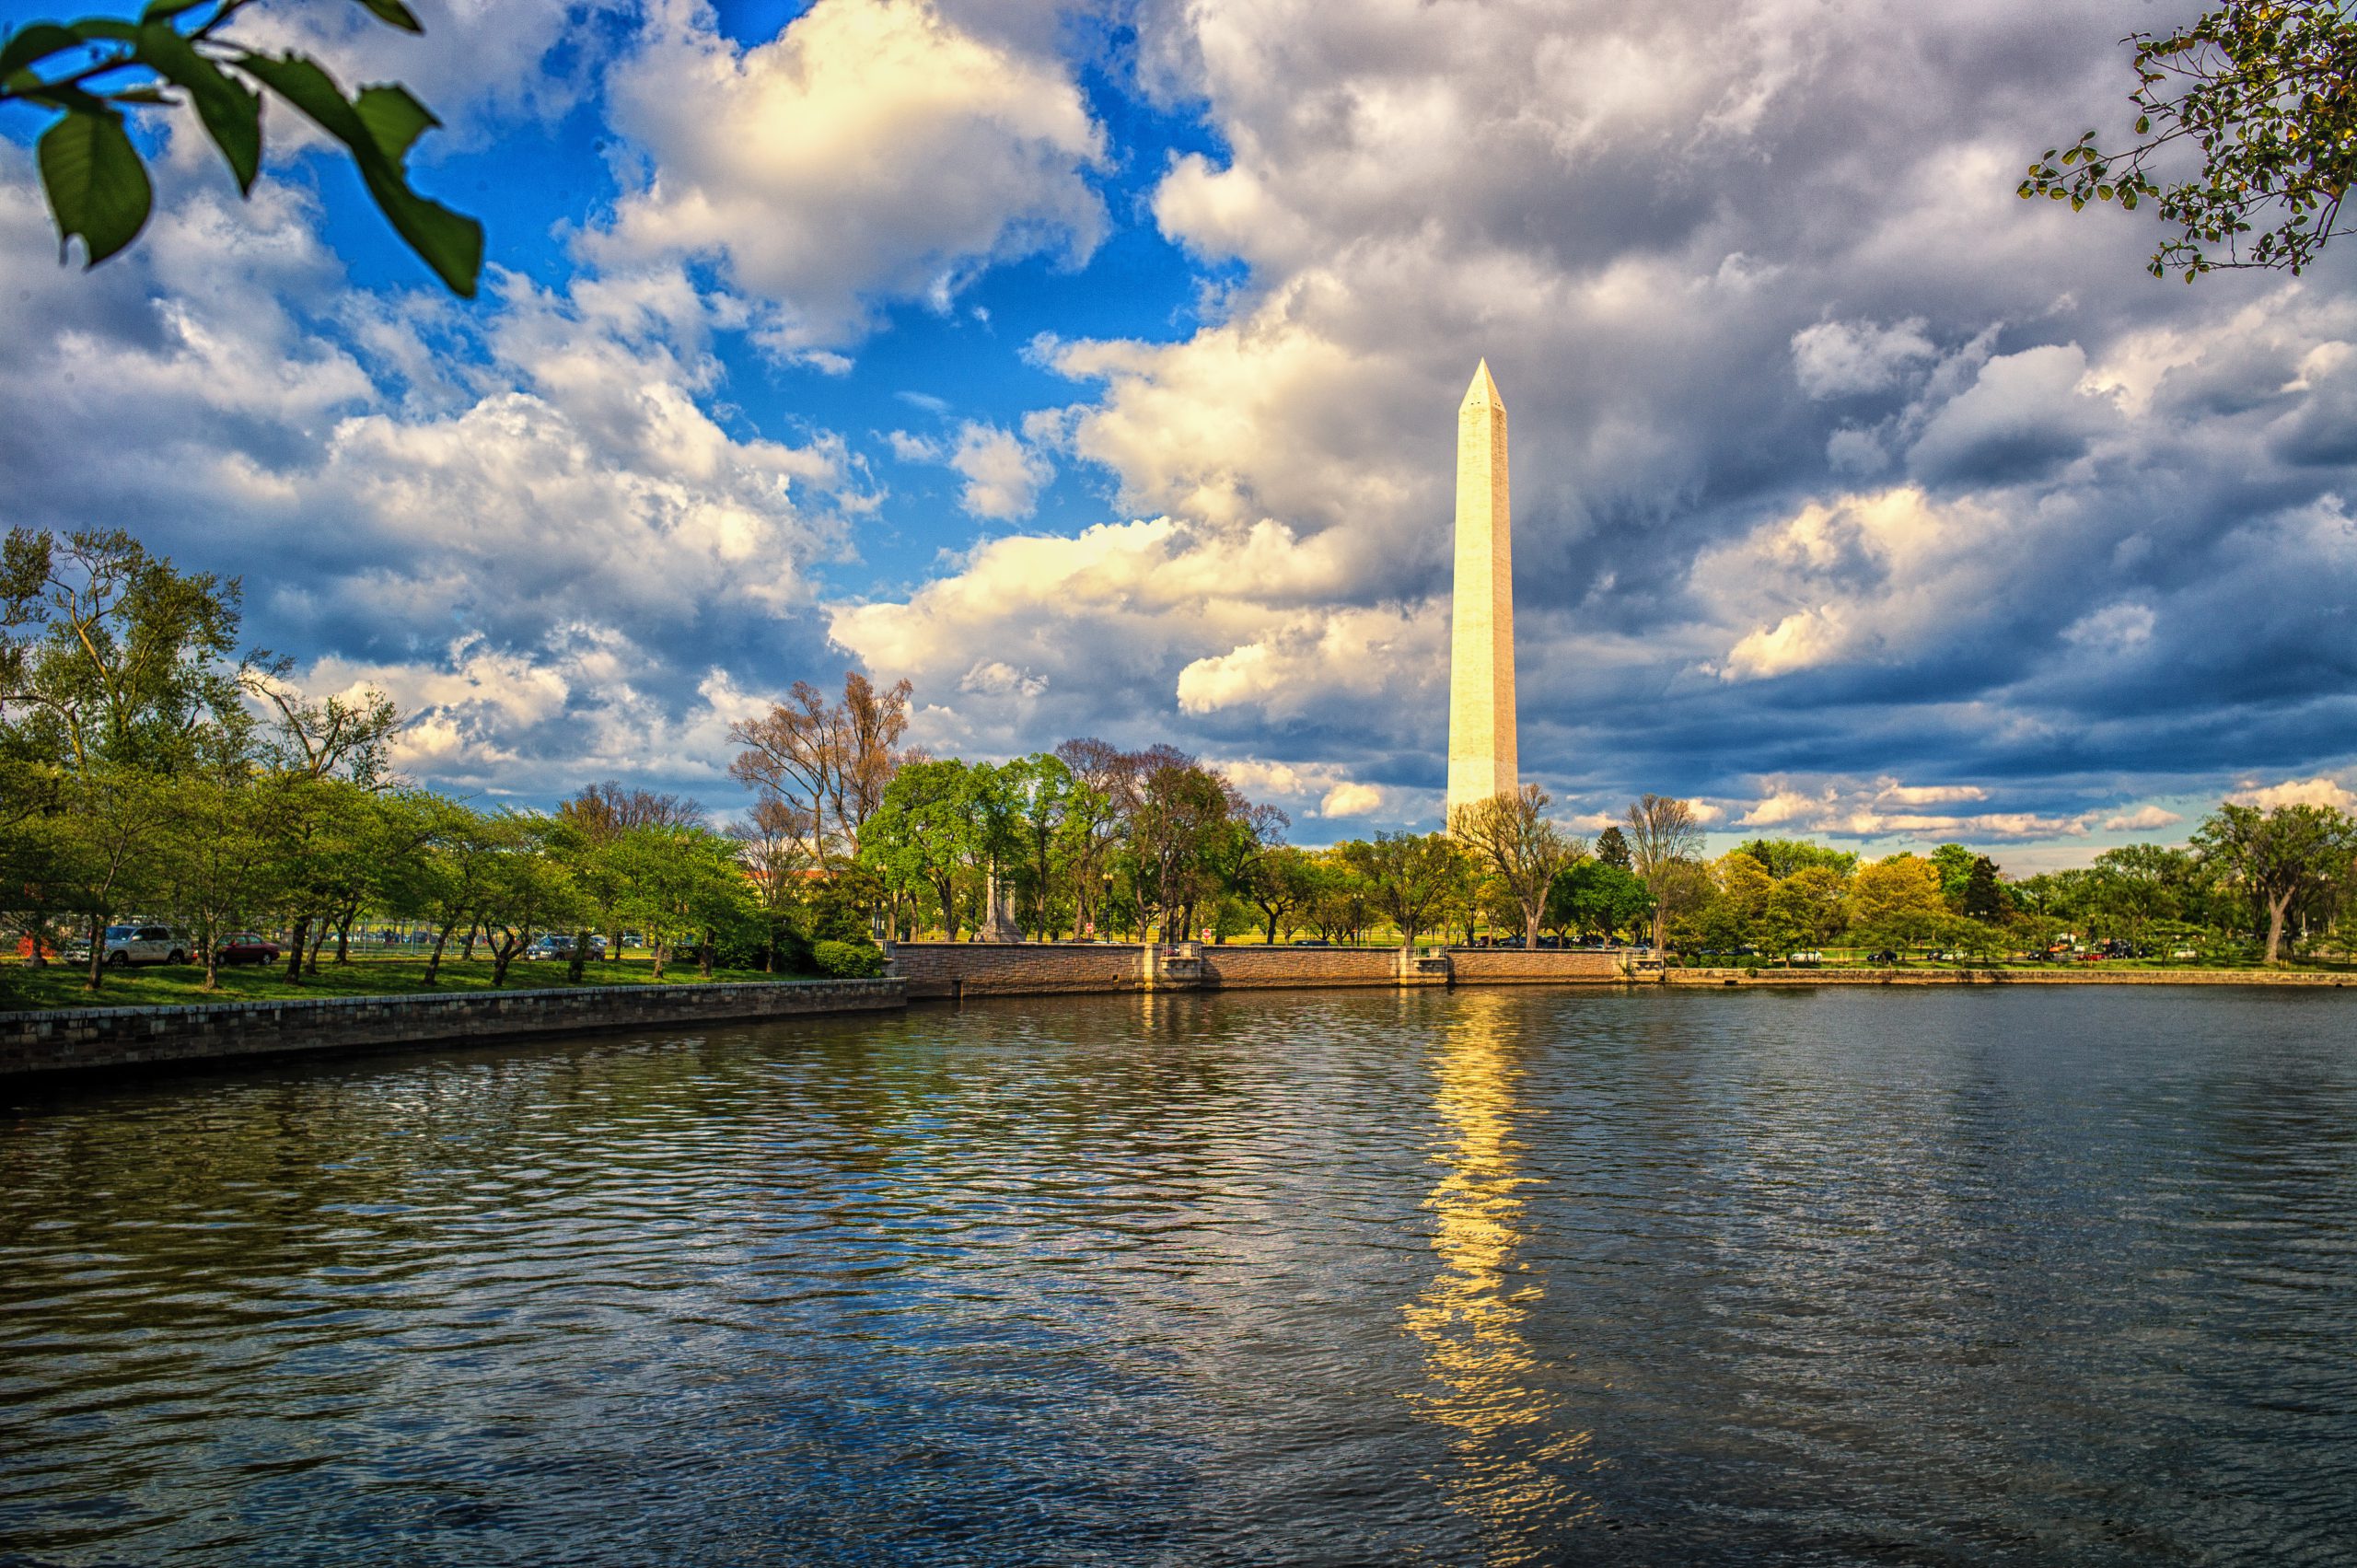 DC: The Washington Monument #2